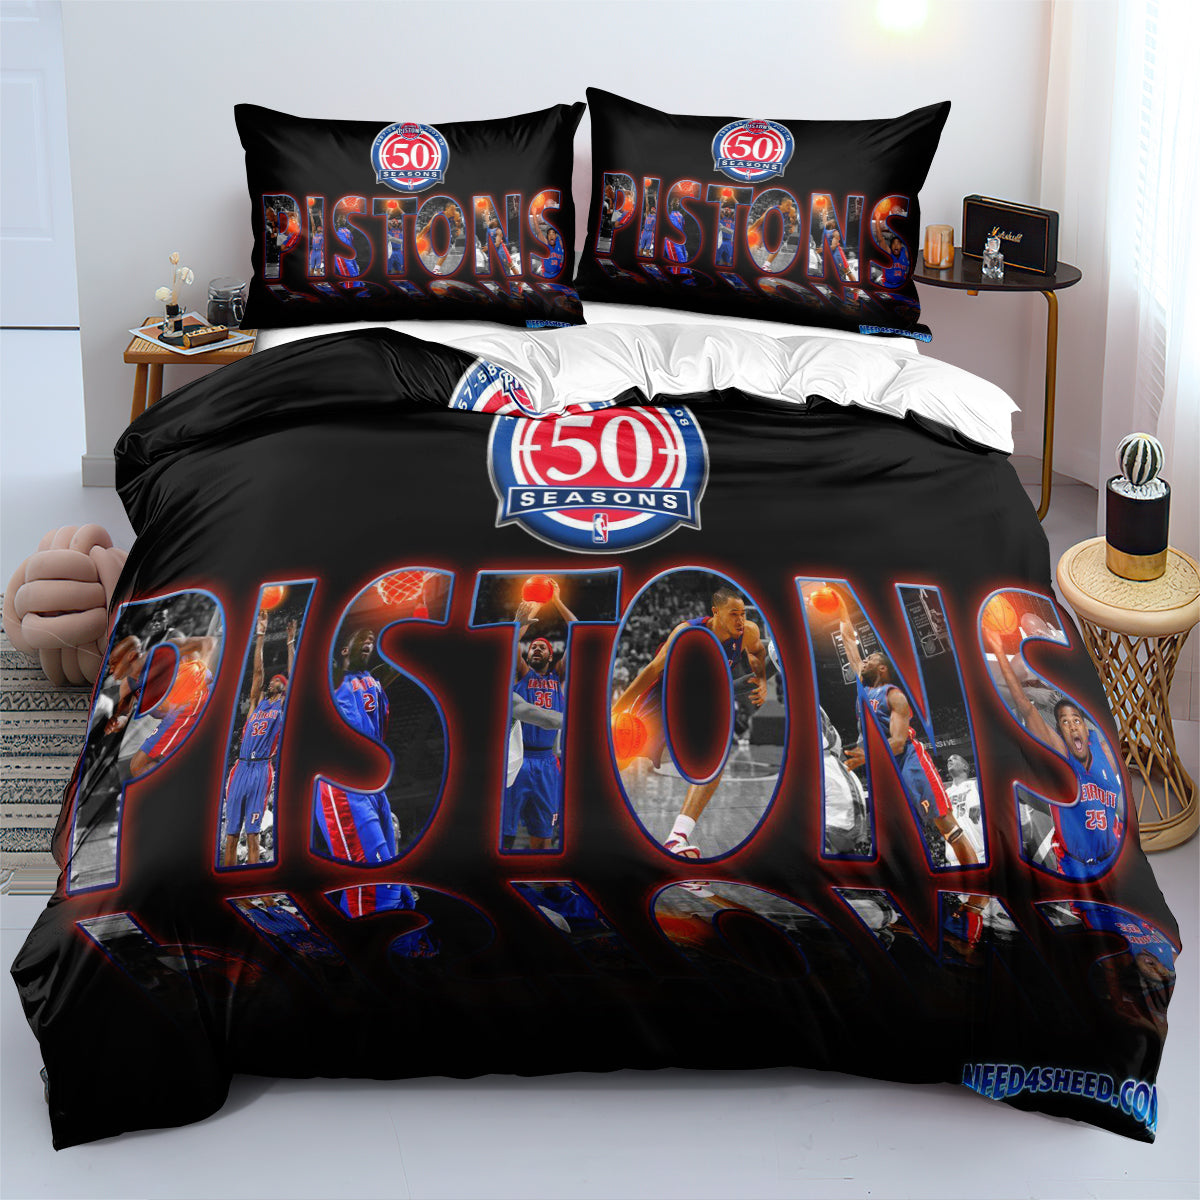 Detroit Pistons Bedding Set Quilt Cover Without Filler